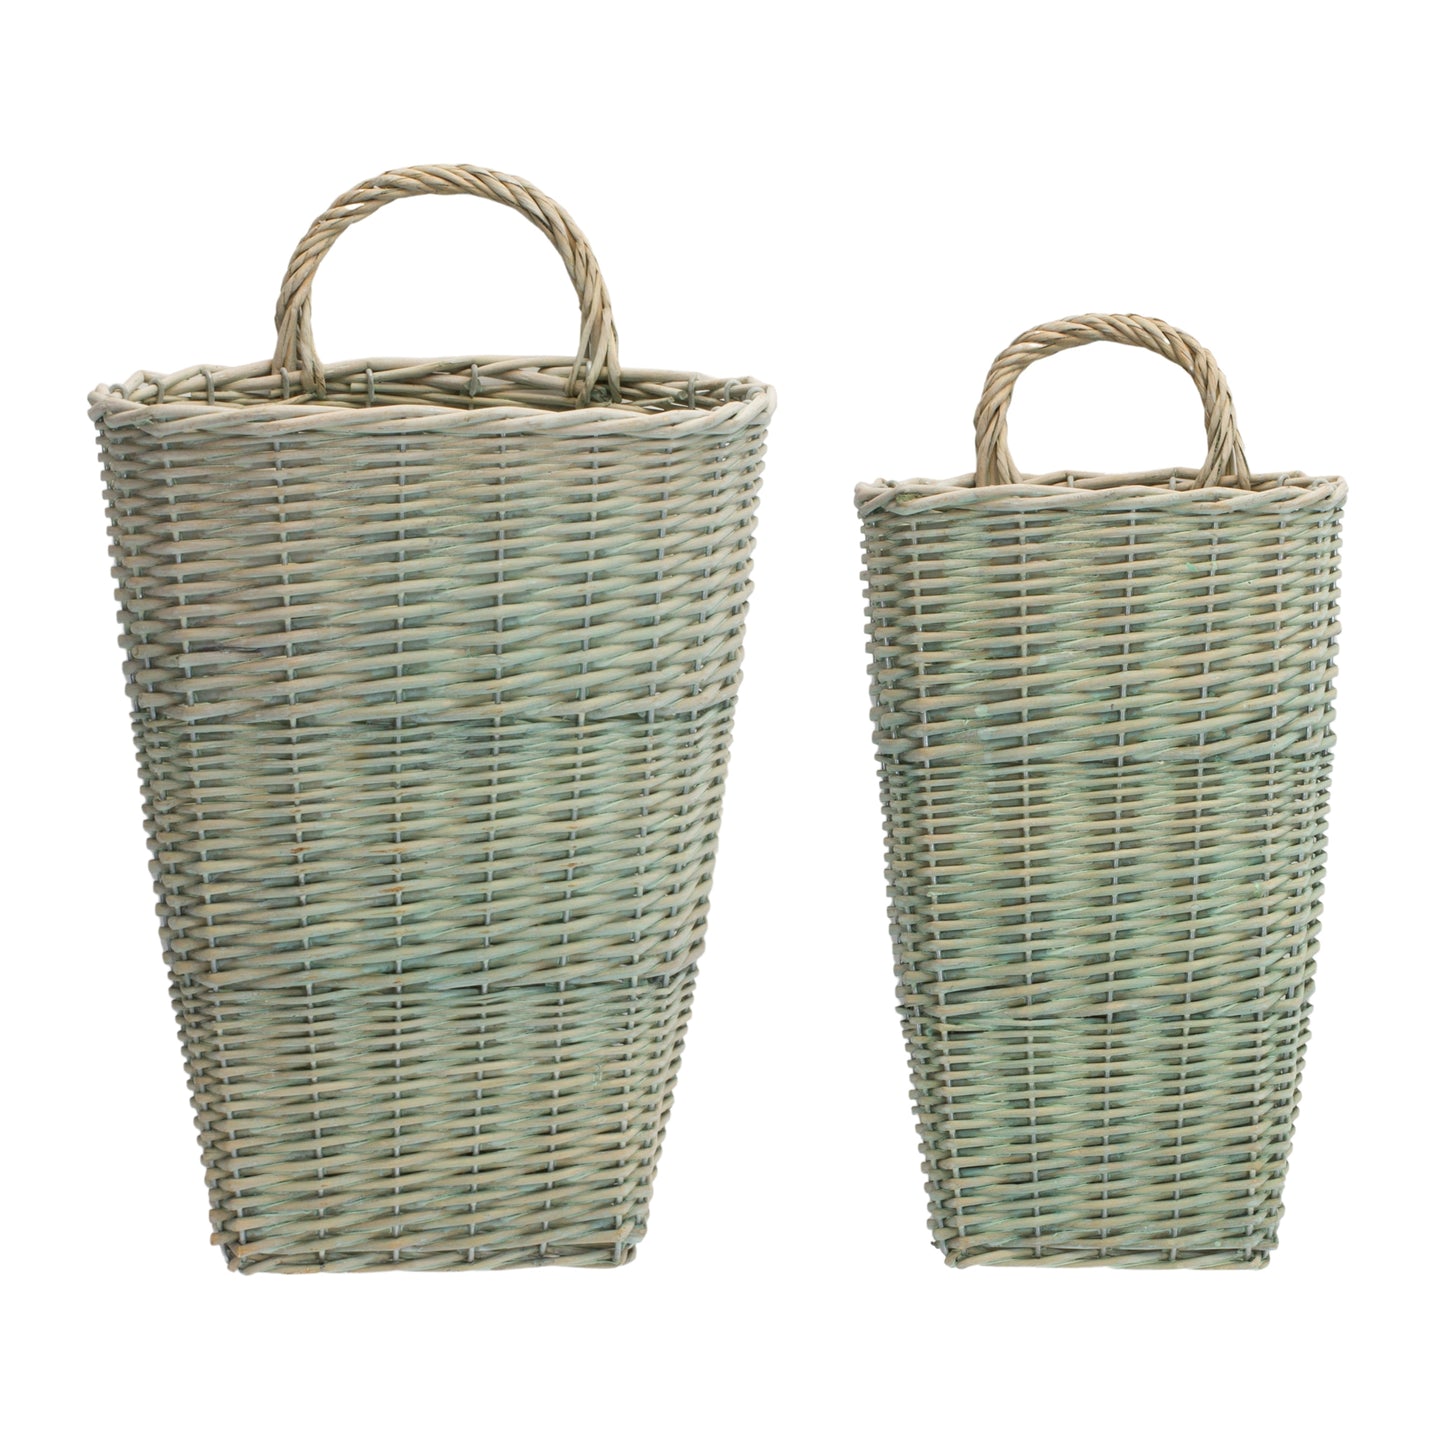 Sage Woven Wicker Wall Baskets (Set of 2)